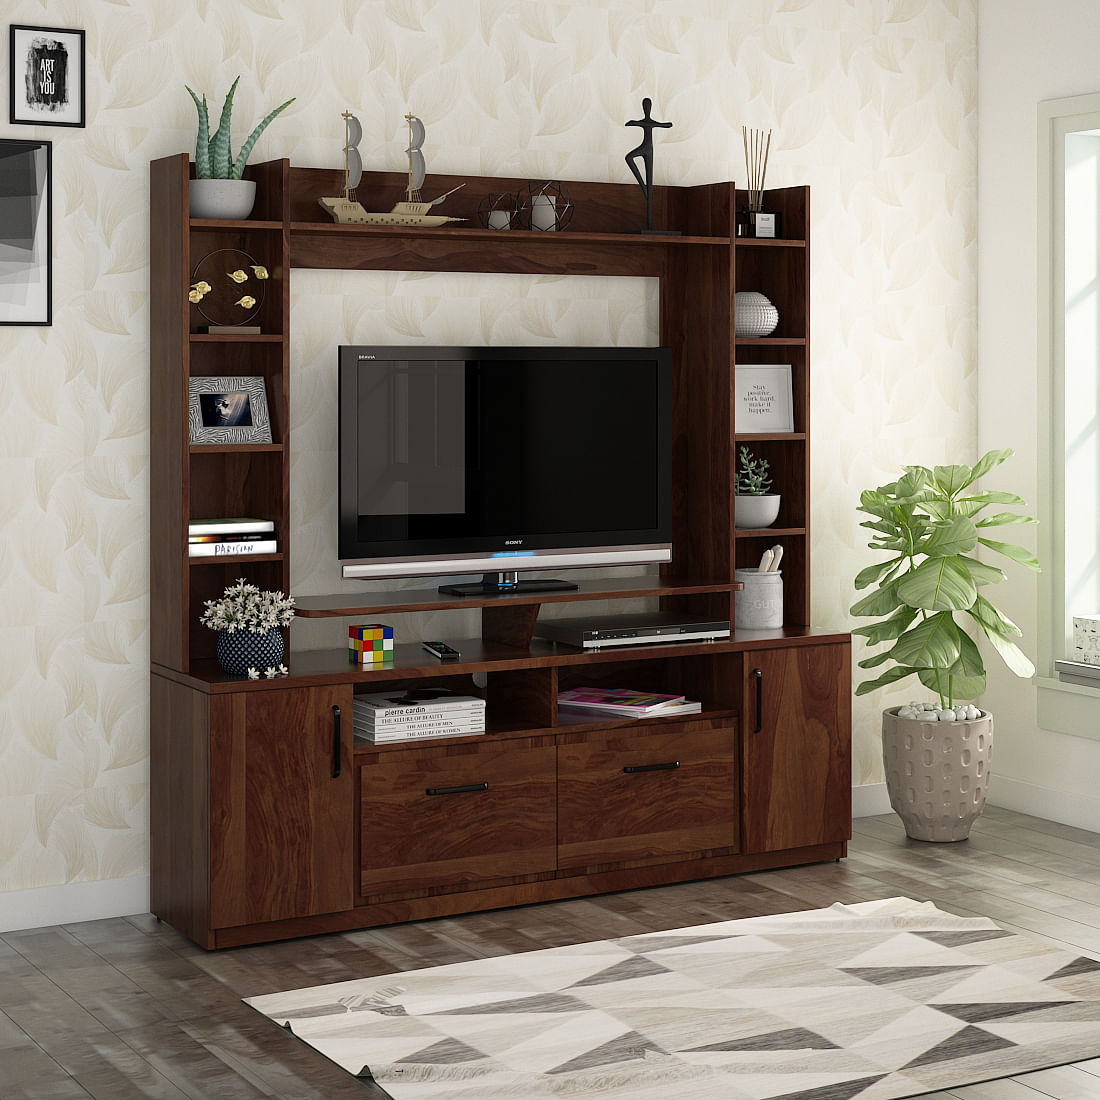 Vandana Interiors Minimalist Off White TV Stand Stone Top Media Console 4  Doors 2 Shelves  Amazonin Home  Kitchen